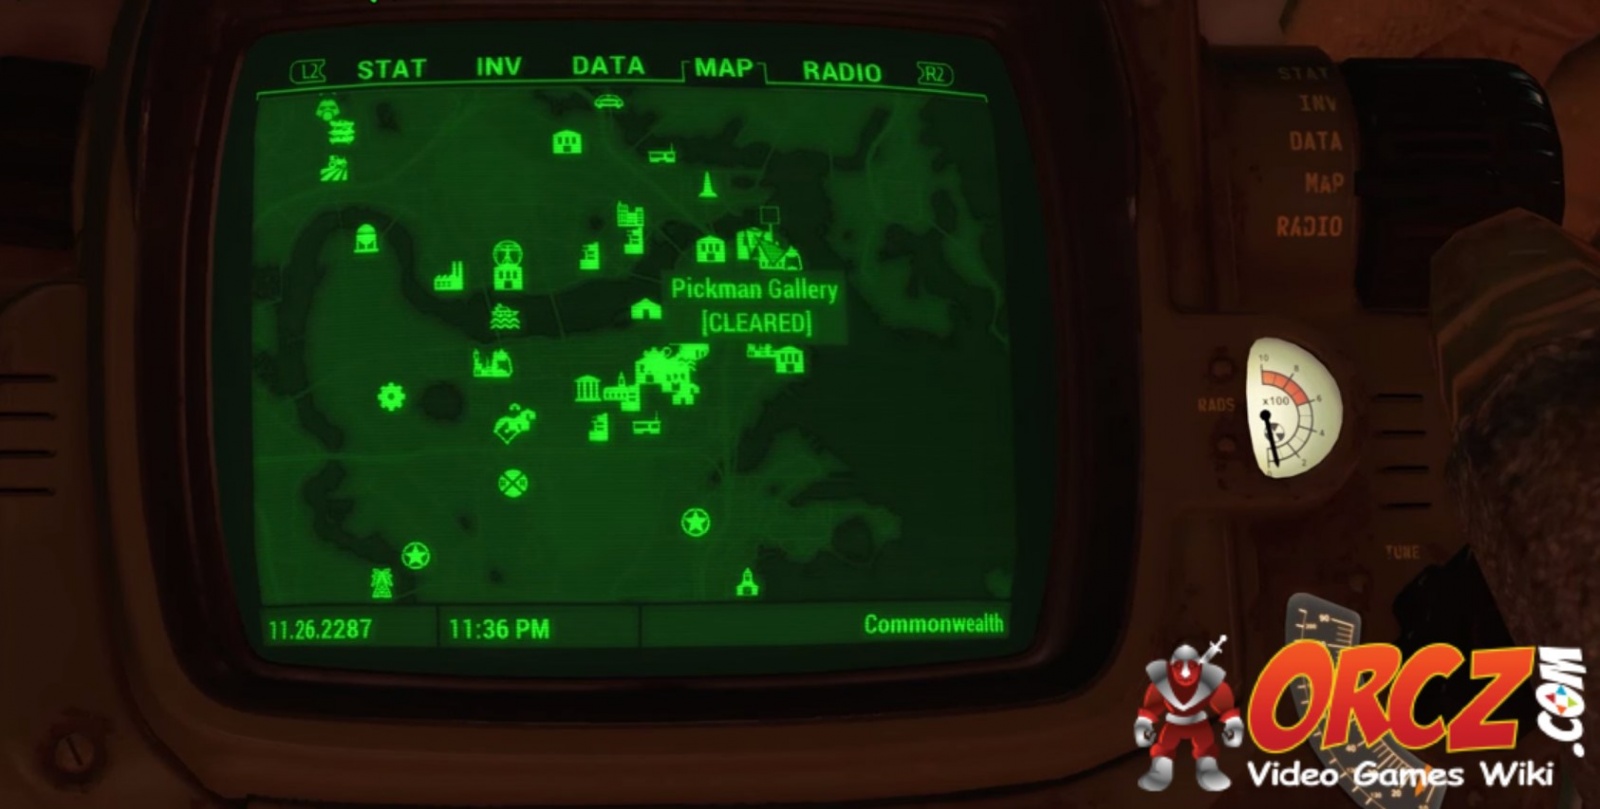 травмпункт доктора бивера fallout 4 где находится на карте фото 2